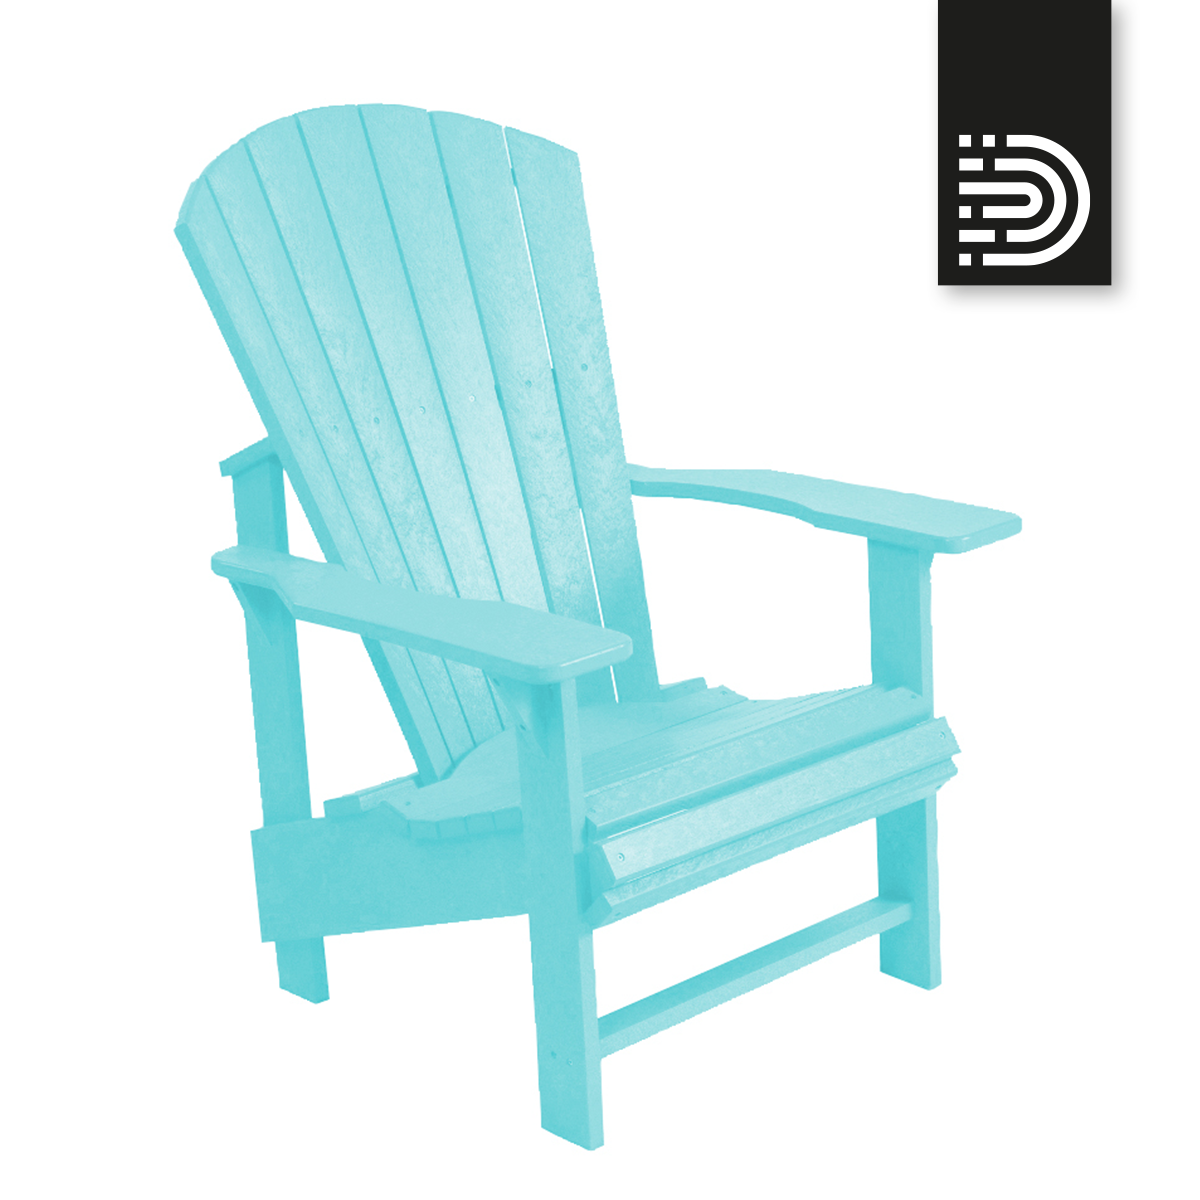 C03 Upright Adirondack Chair - aqua 11